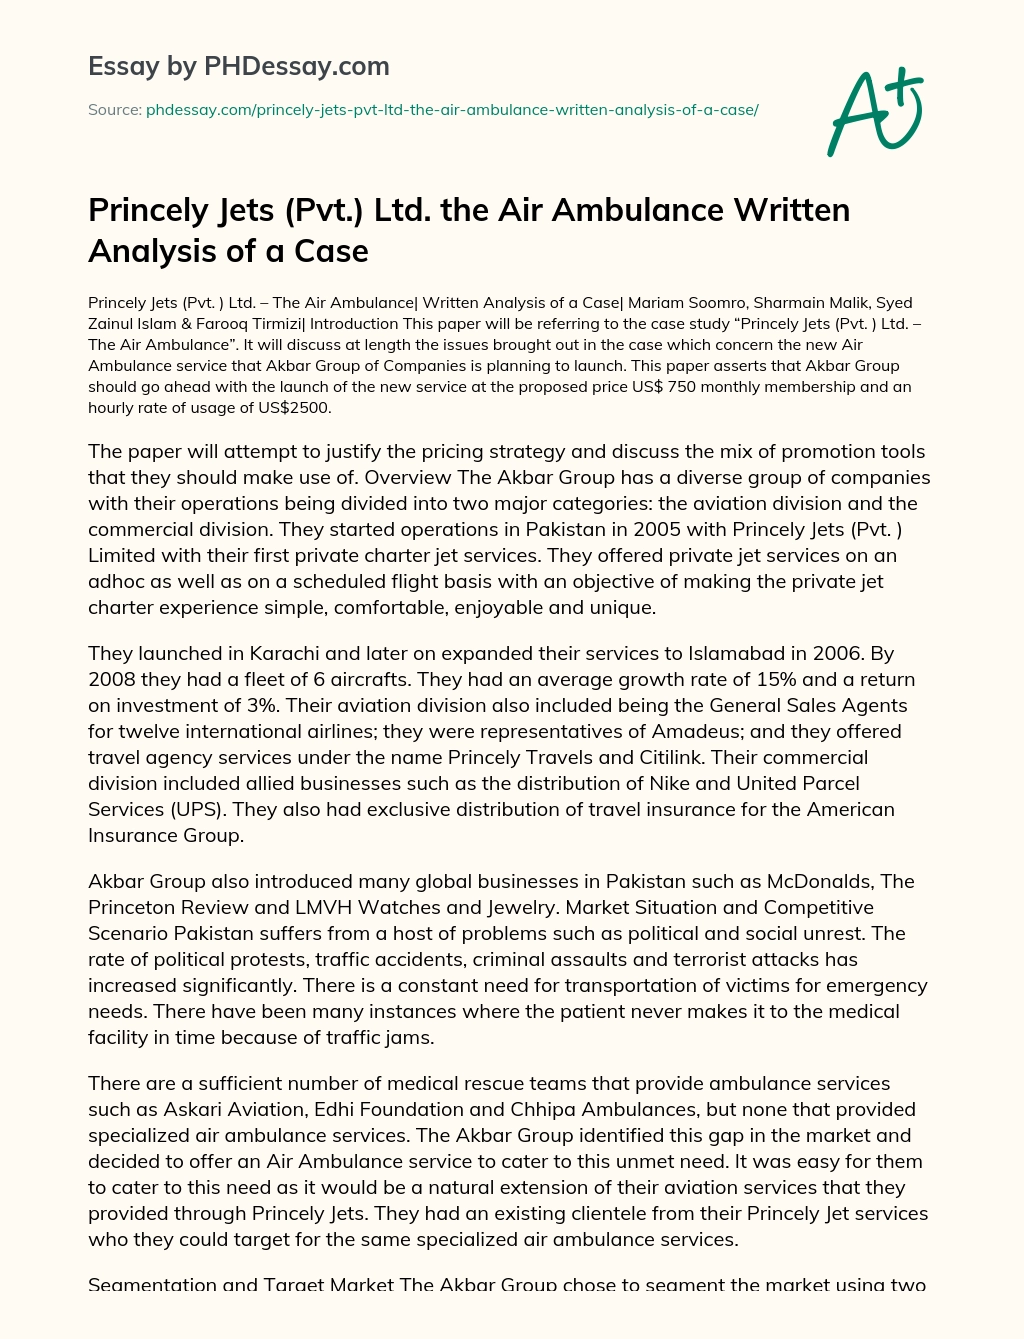 Princely Jets (Pvt.) Ltd. the Air Ambulance essay